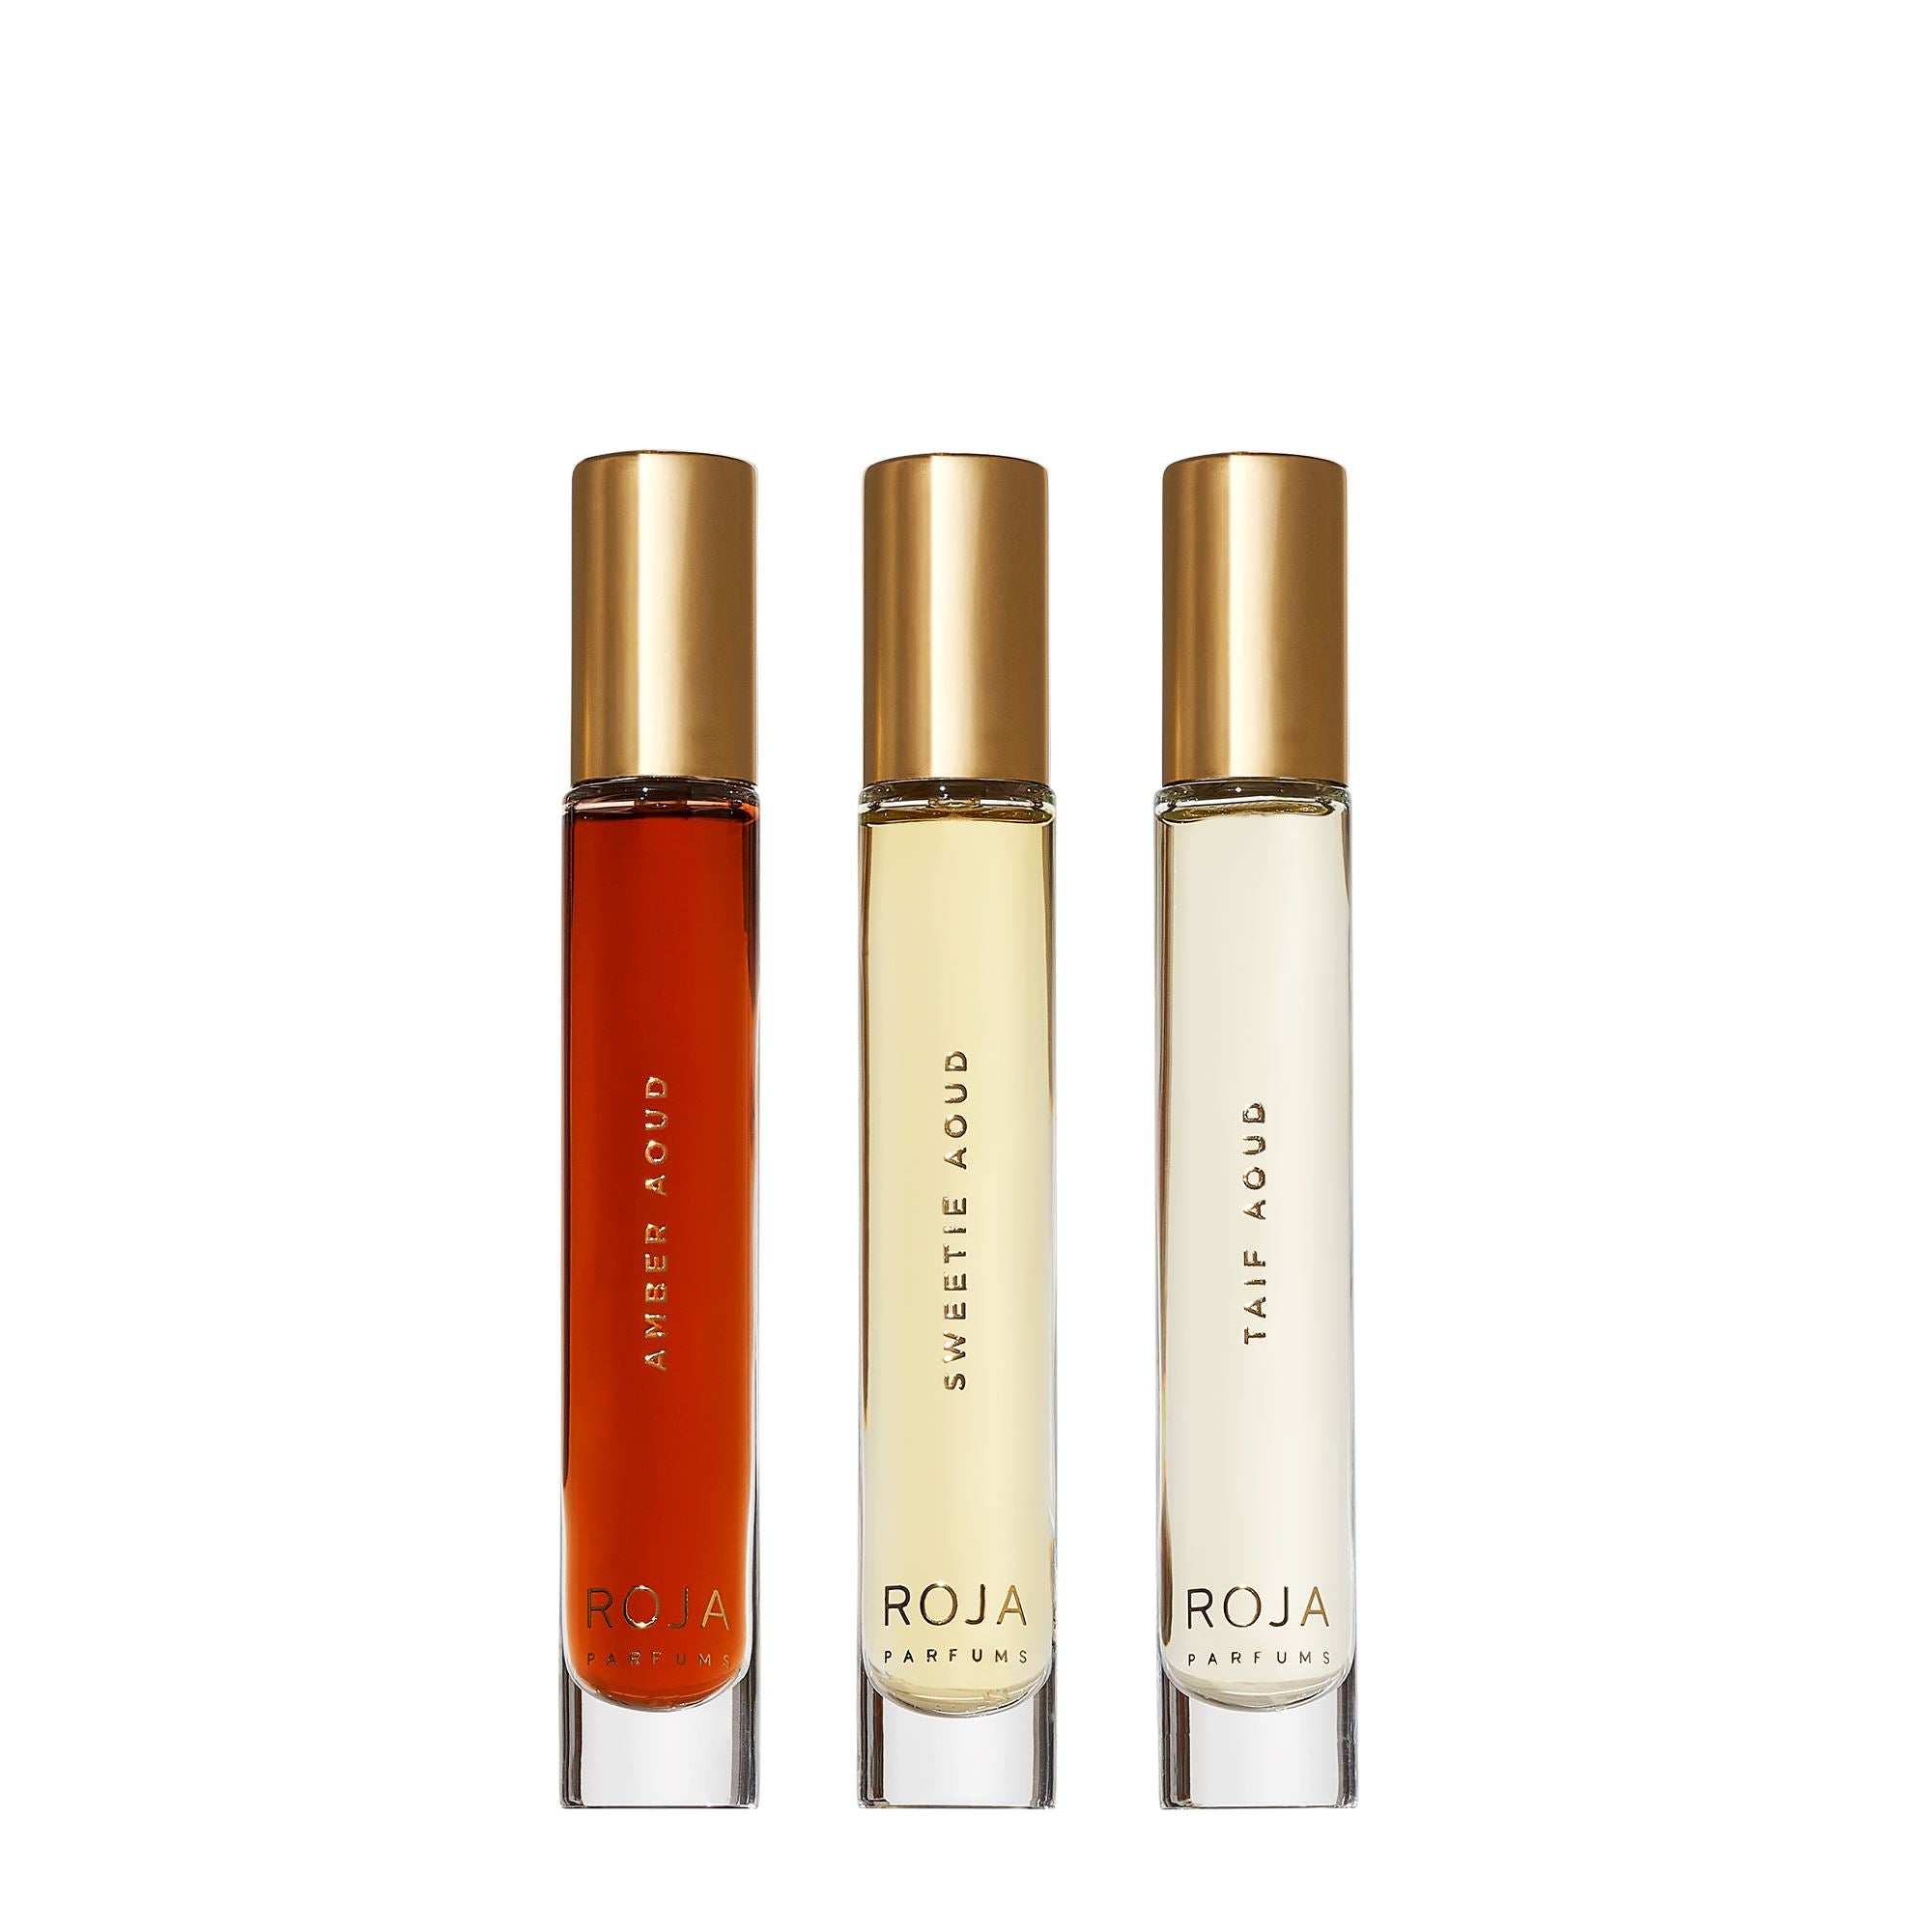 Aoud Travel Sprays | Travel Size Perfume Sets | Roja Parfums